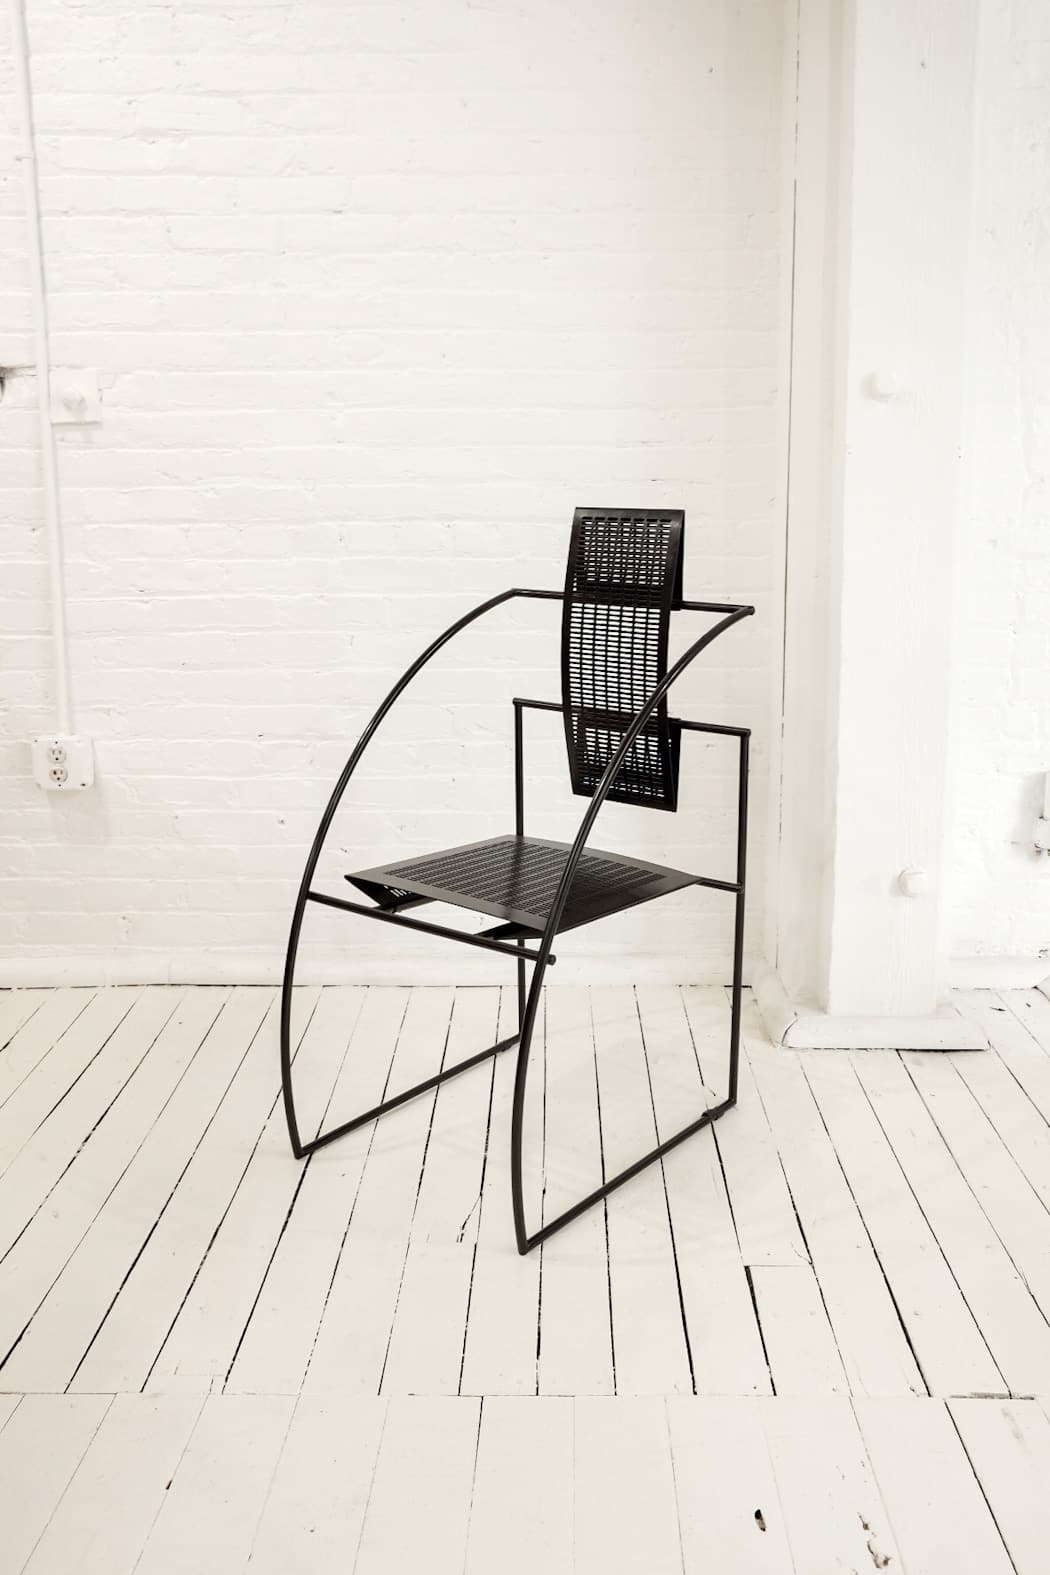 Quinta Chair by Mario Botta for Alias : RENTAL